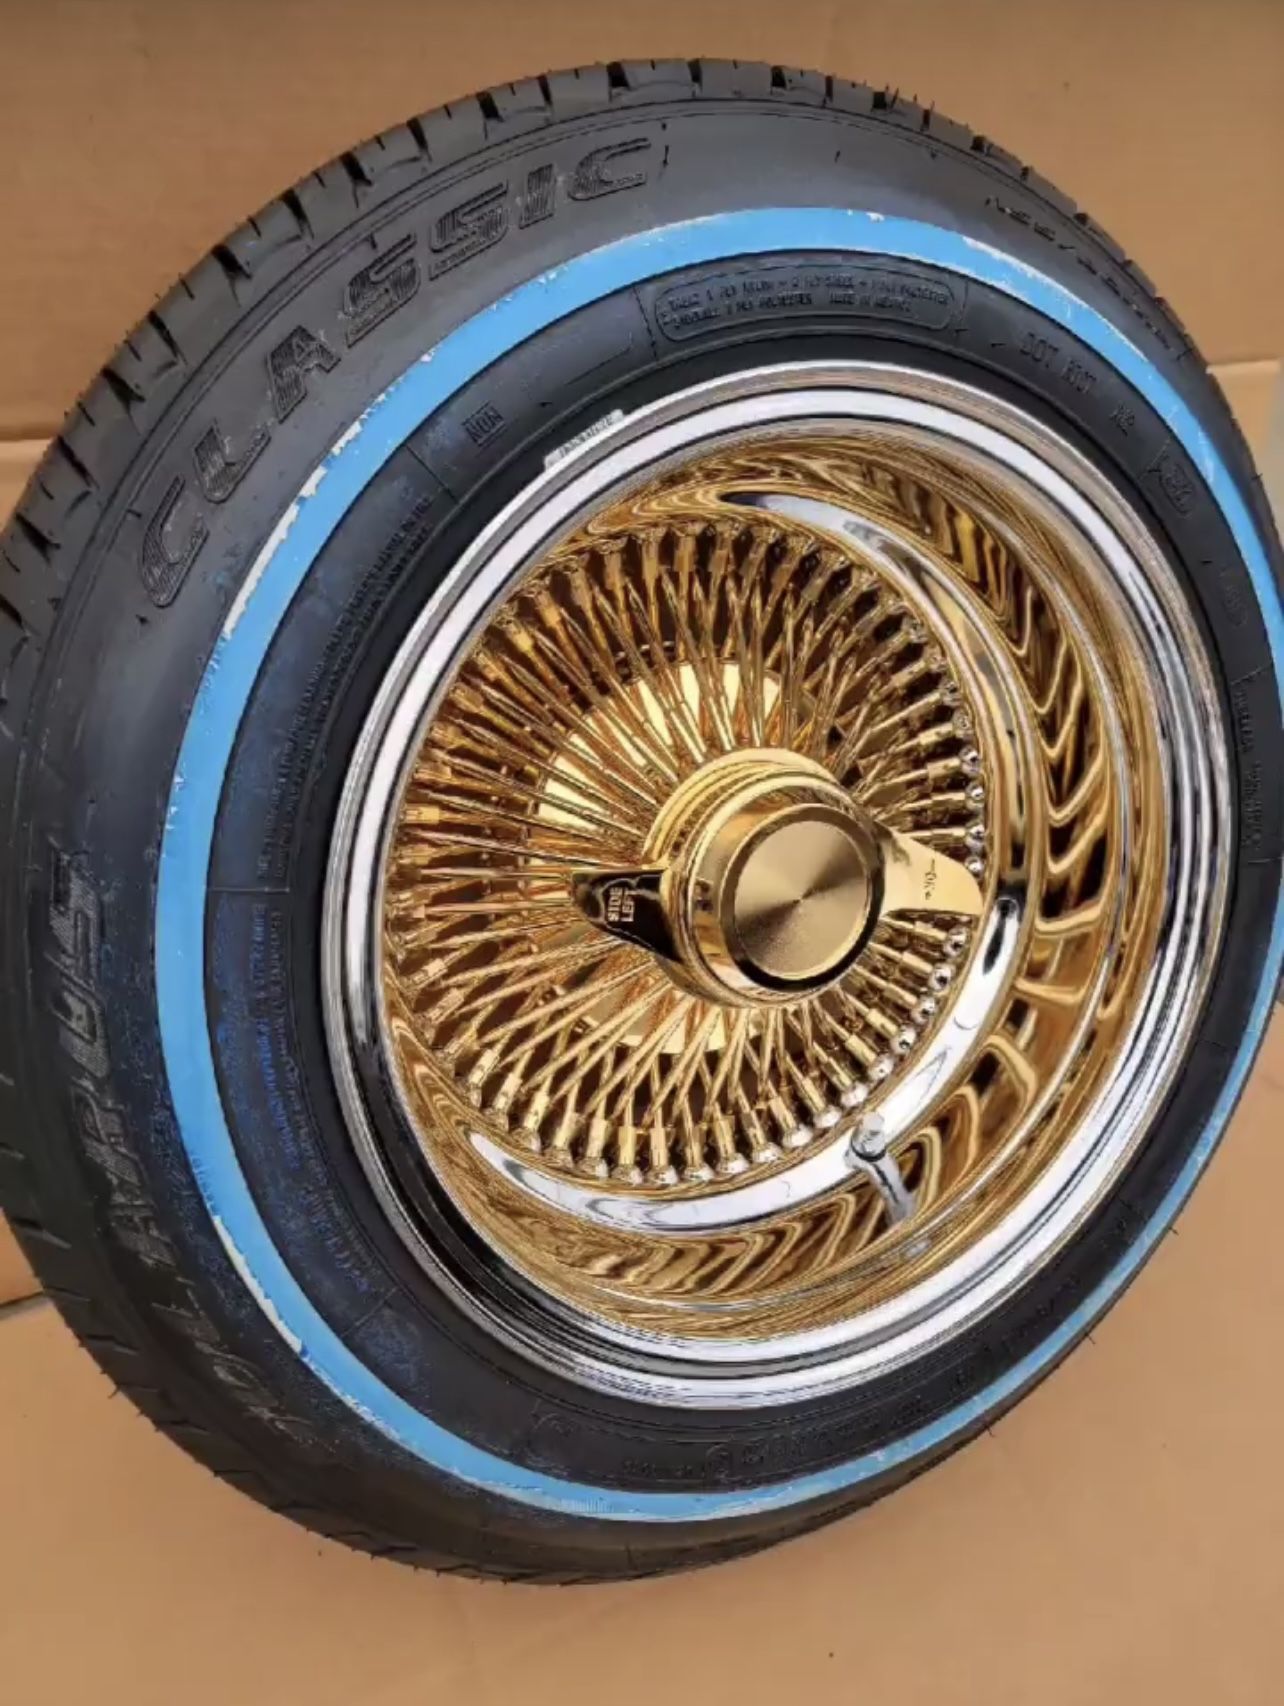 13x7 100 Spoke Center Gold Remington Tires 